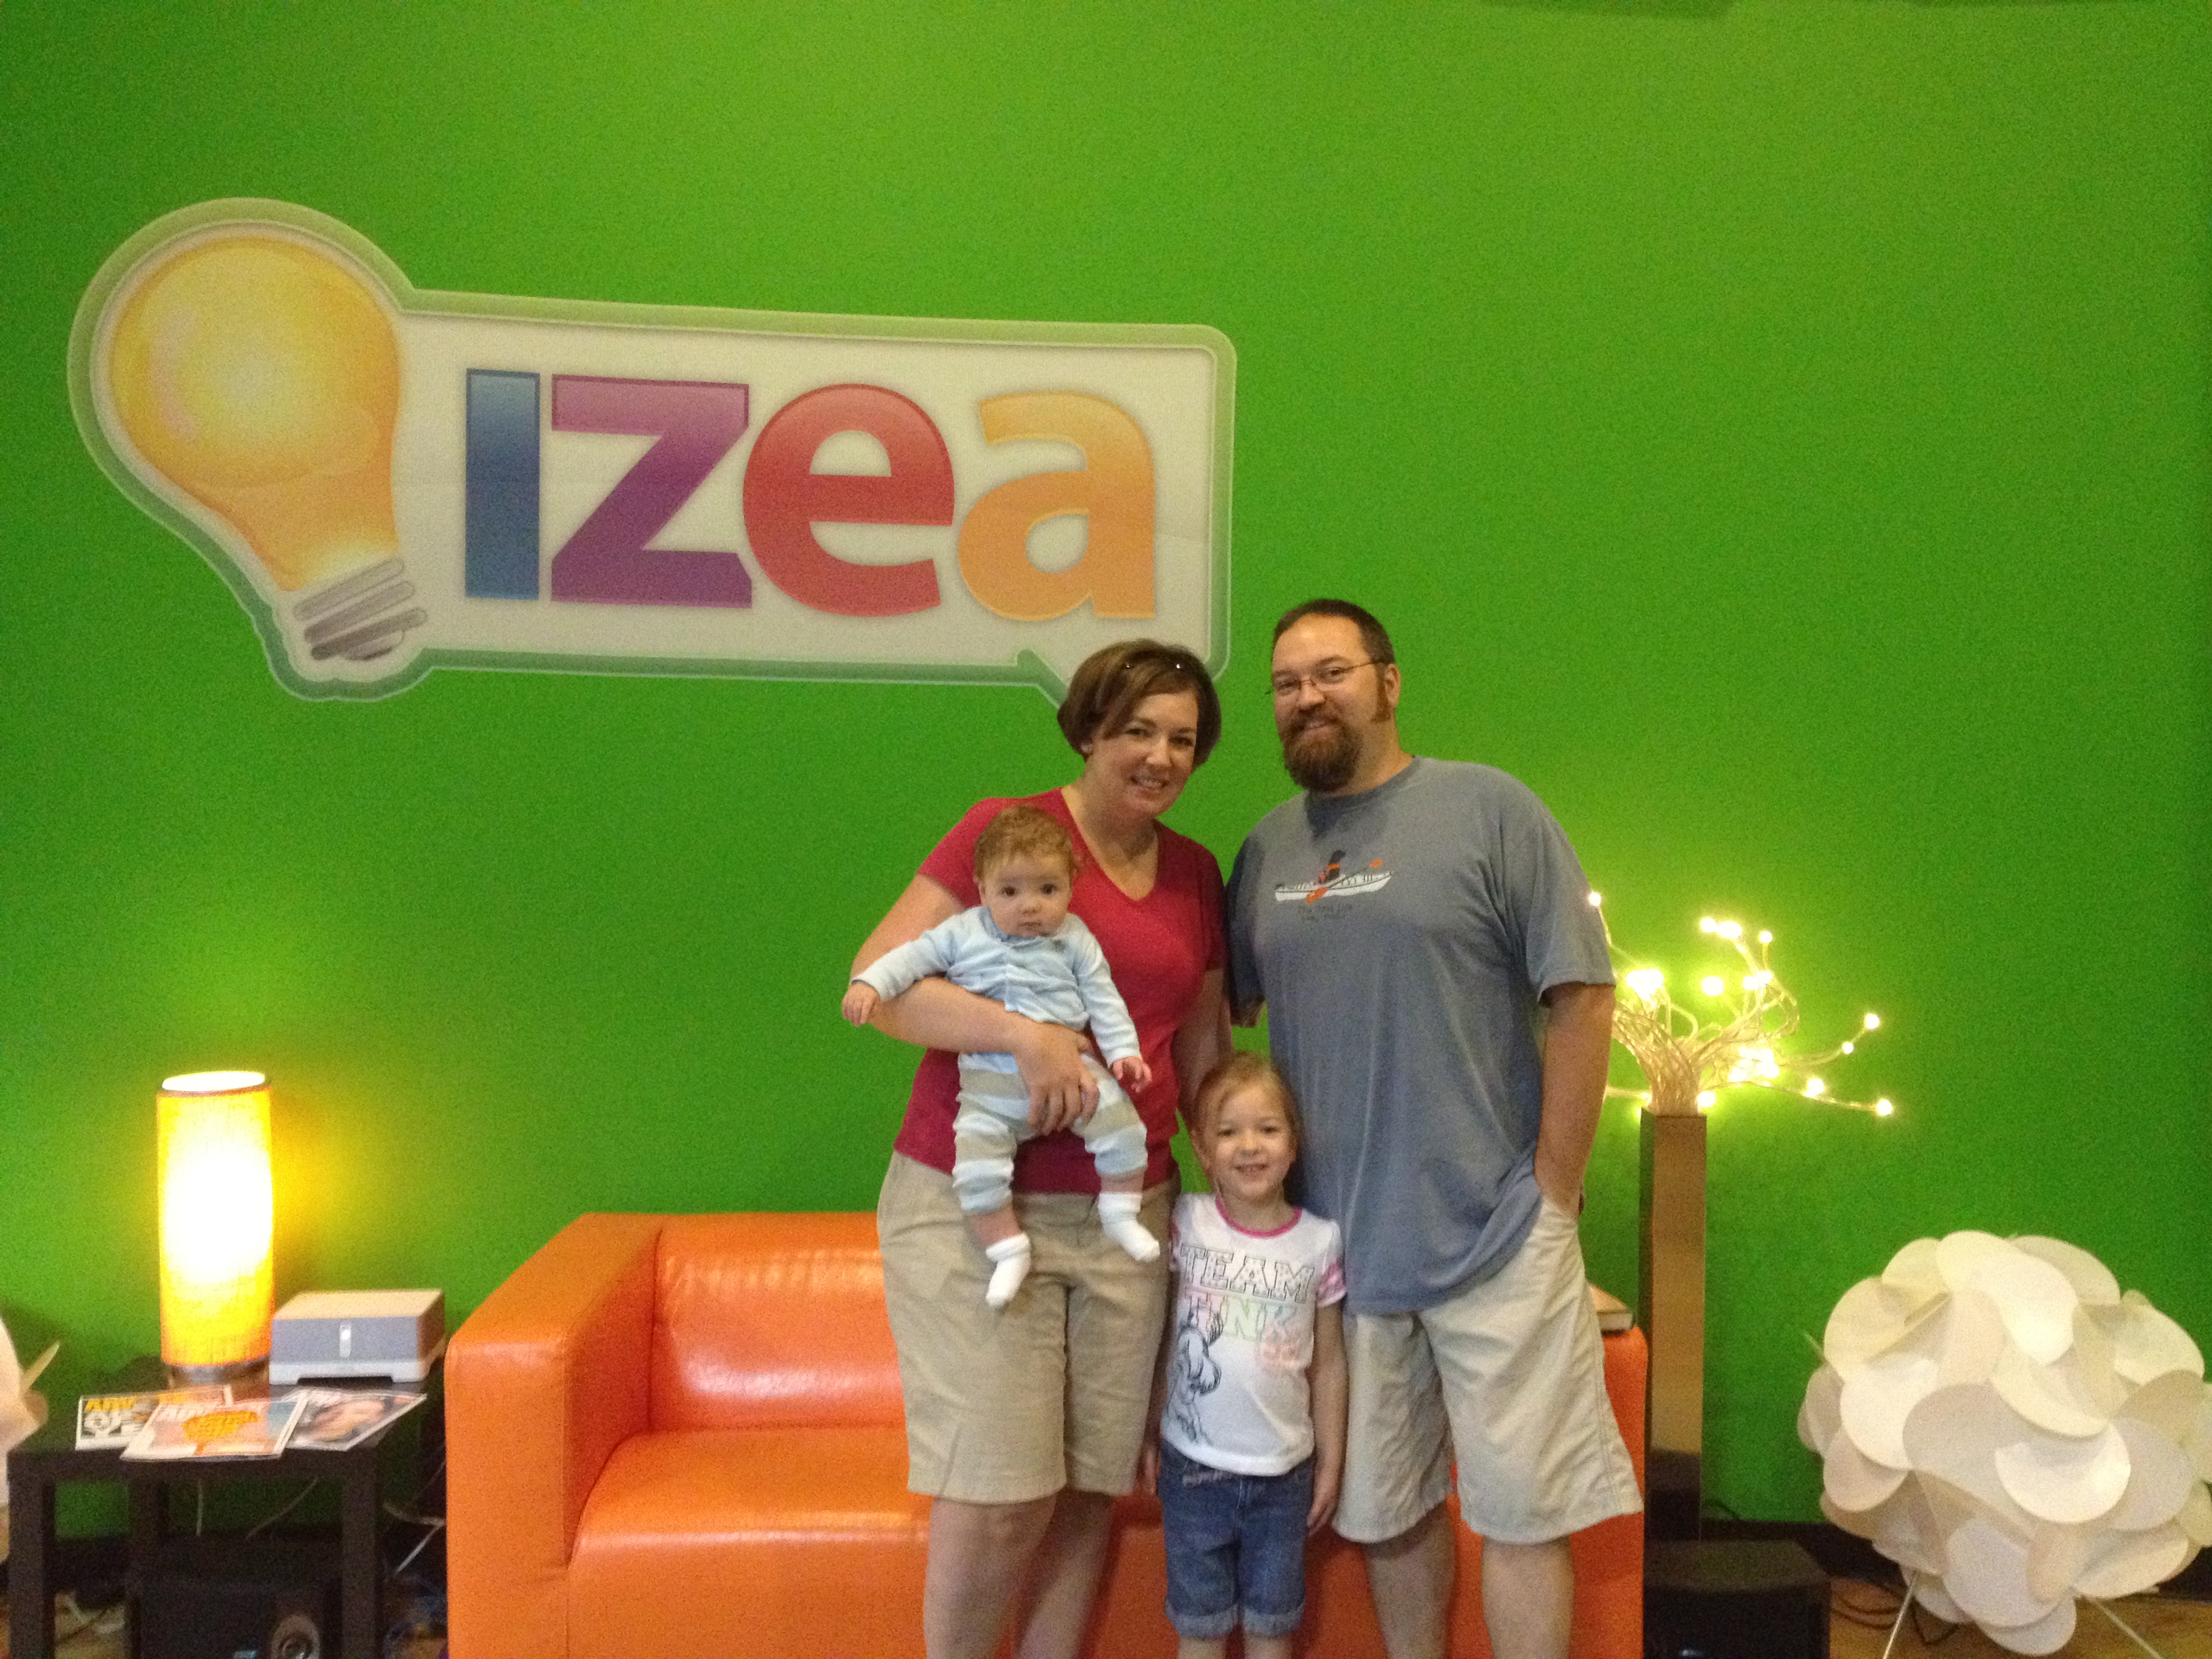 Family visit to IZEA